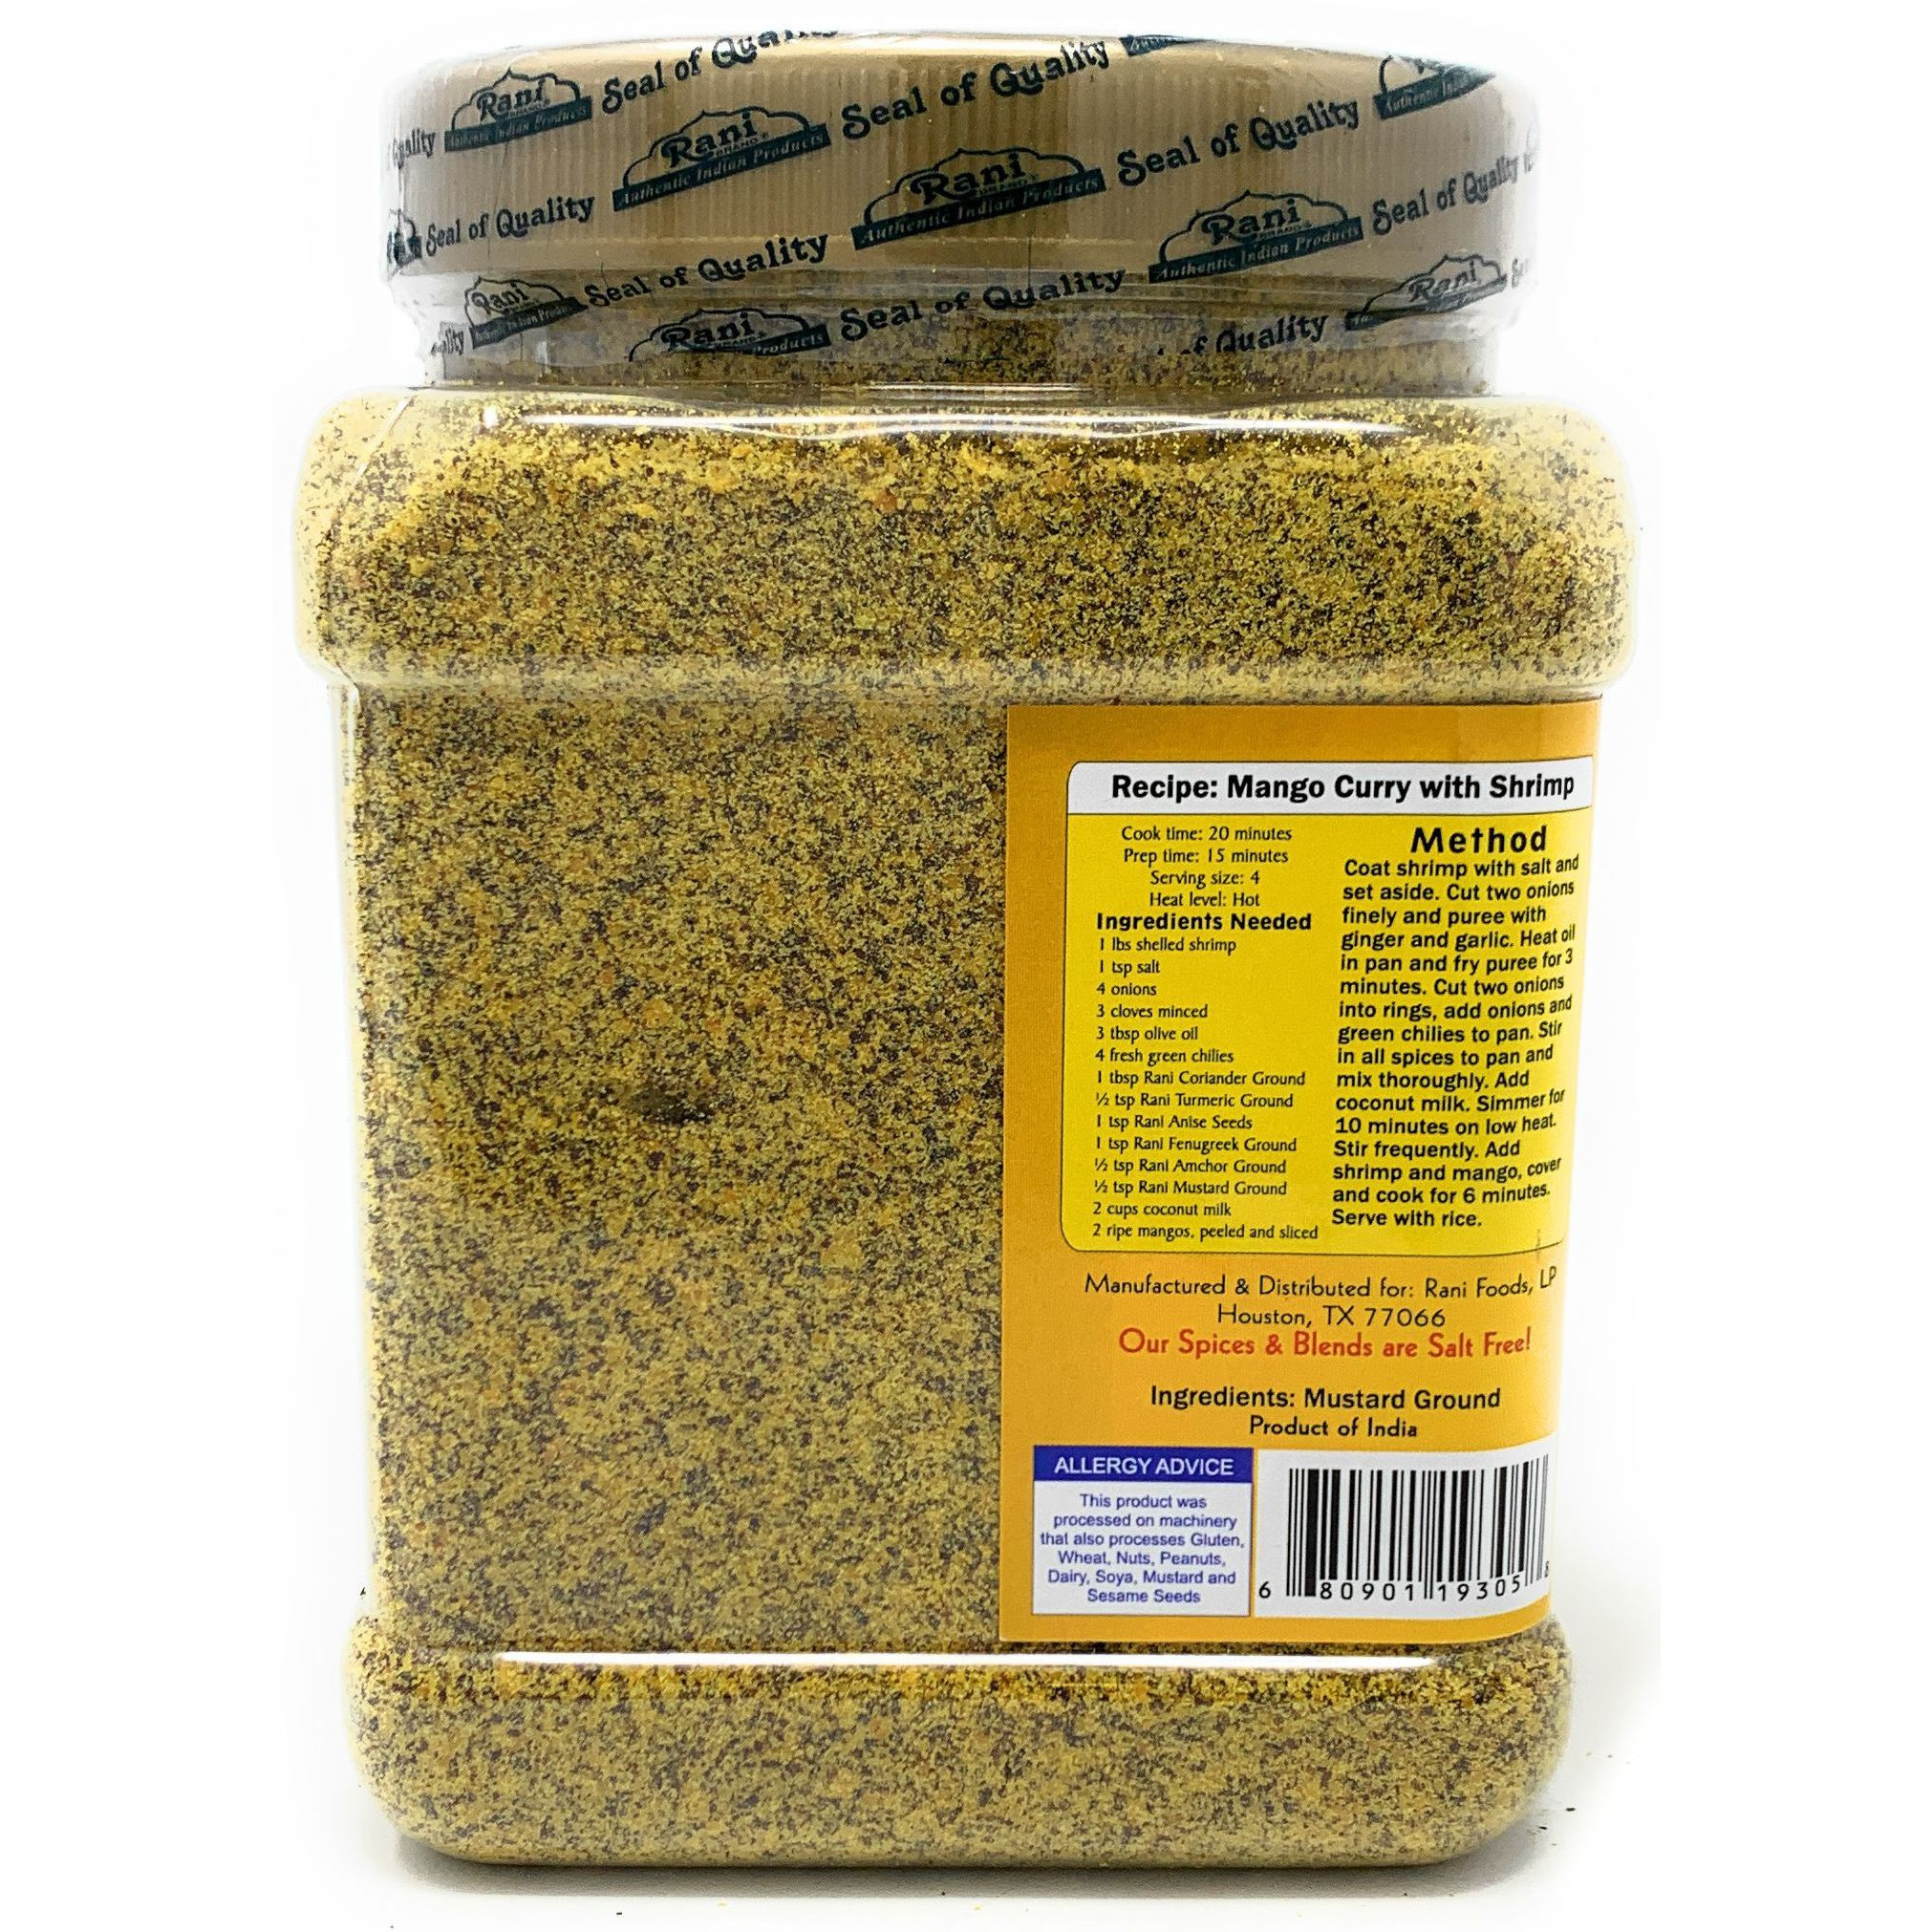 Rani Mustard Seeds Ground, Powder Spice (Rai Sarson) 16oz (454g) 1 Pound, 1lb ~ All Natural | Gluten Free Ingredients | NON-GMO | Vegan | Indian Origin